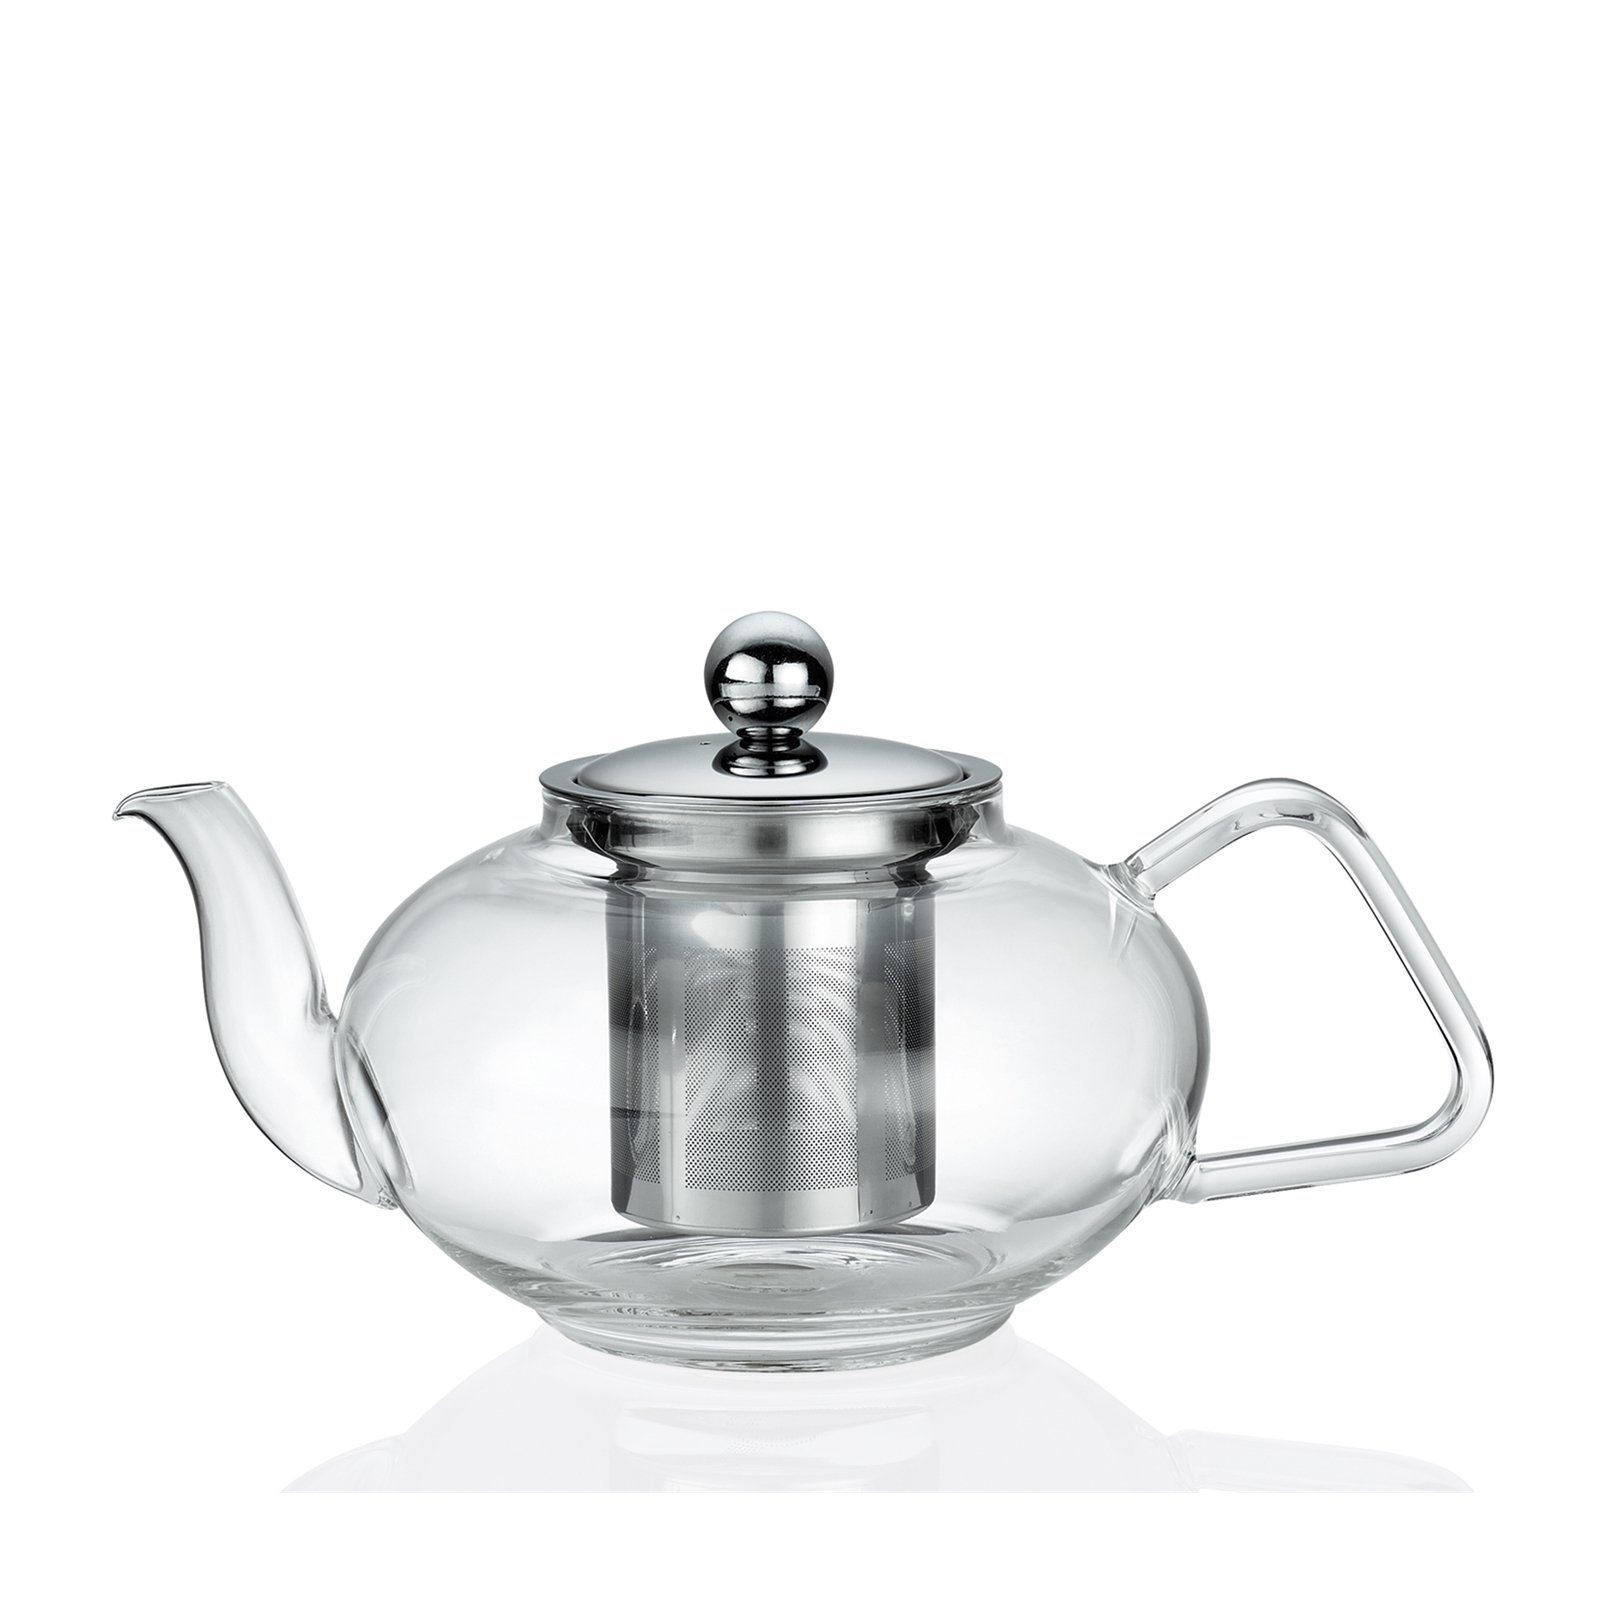 Küchenprofi Teekanne Teekanne Tibet Tea, 0.8 l